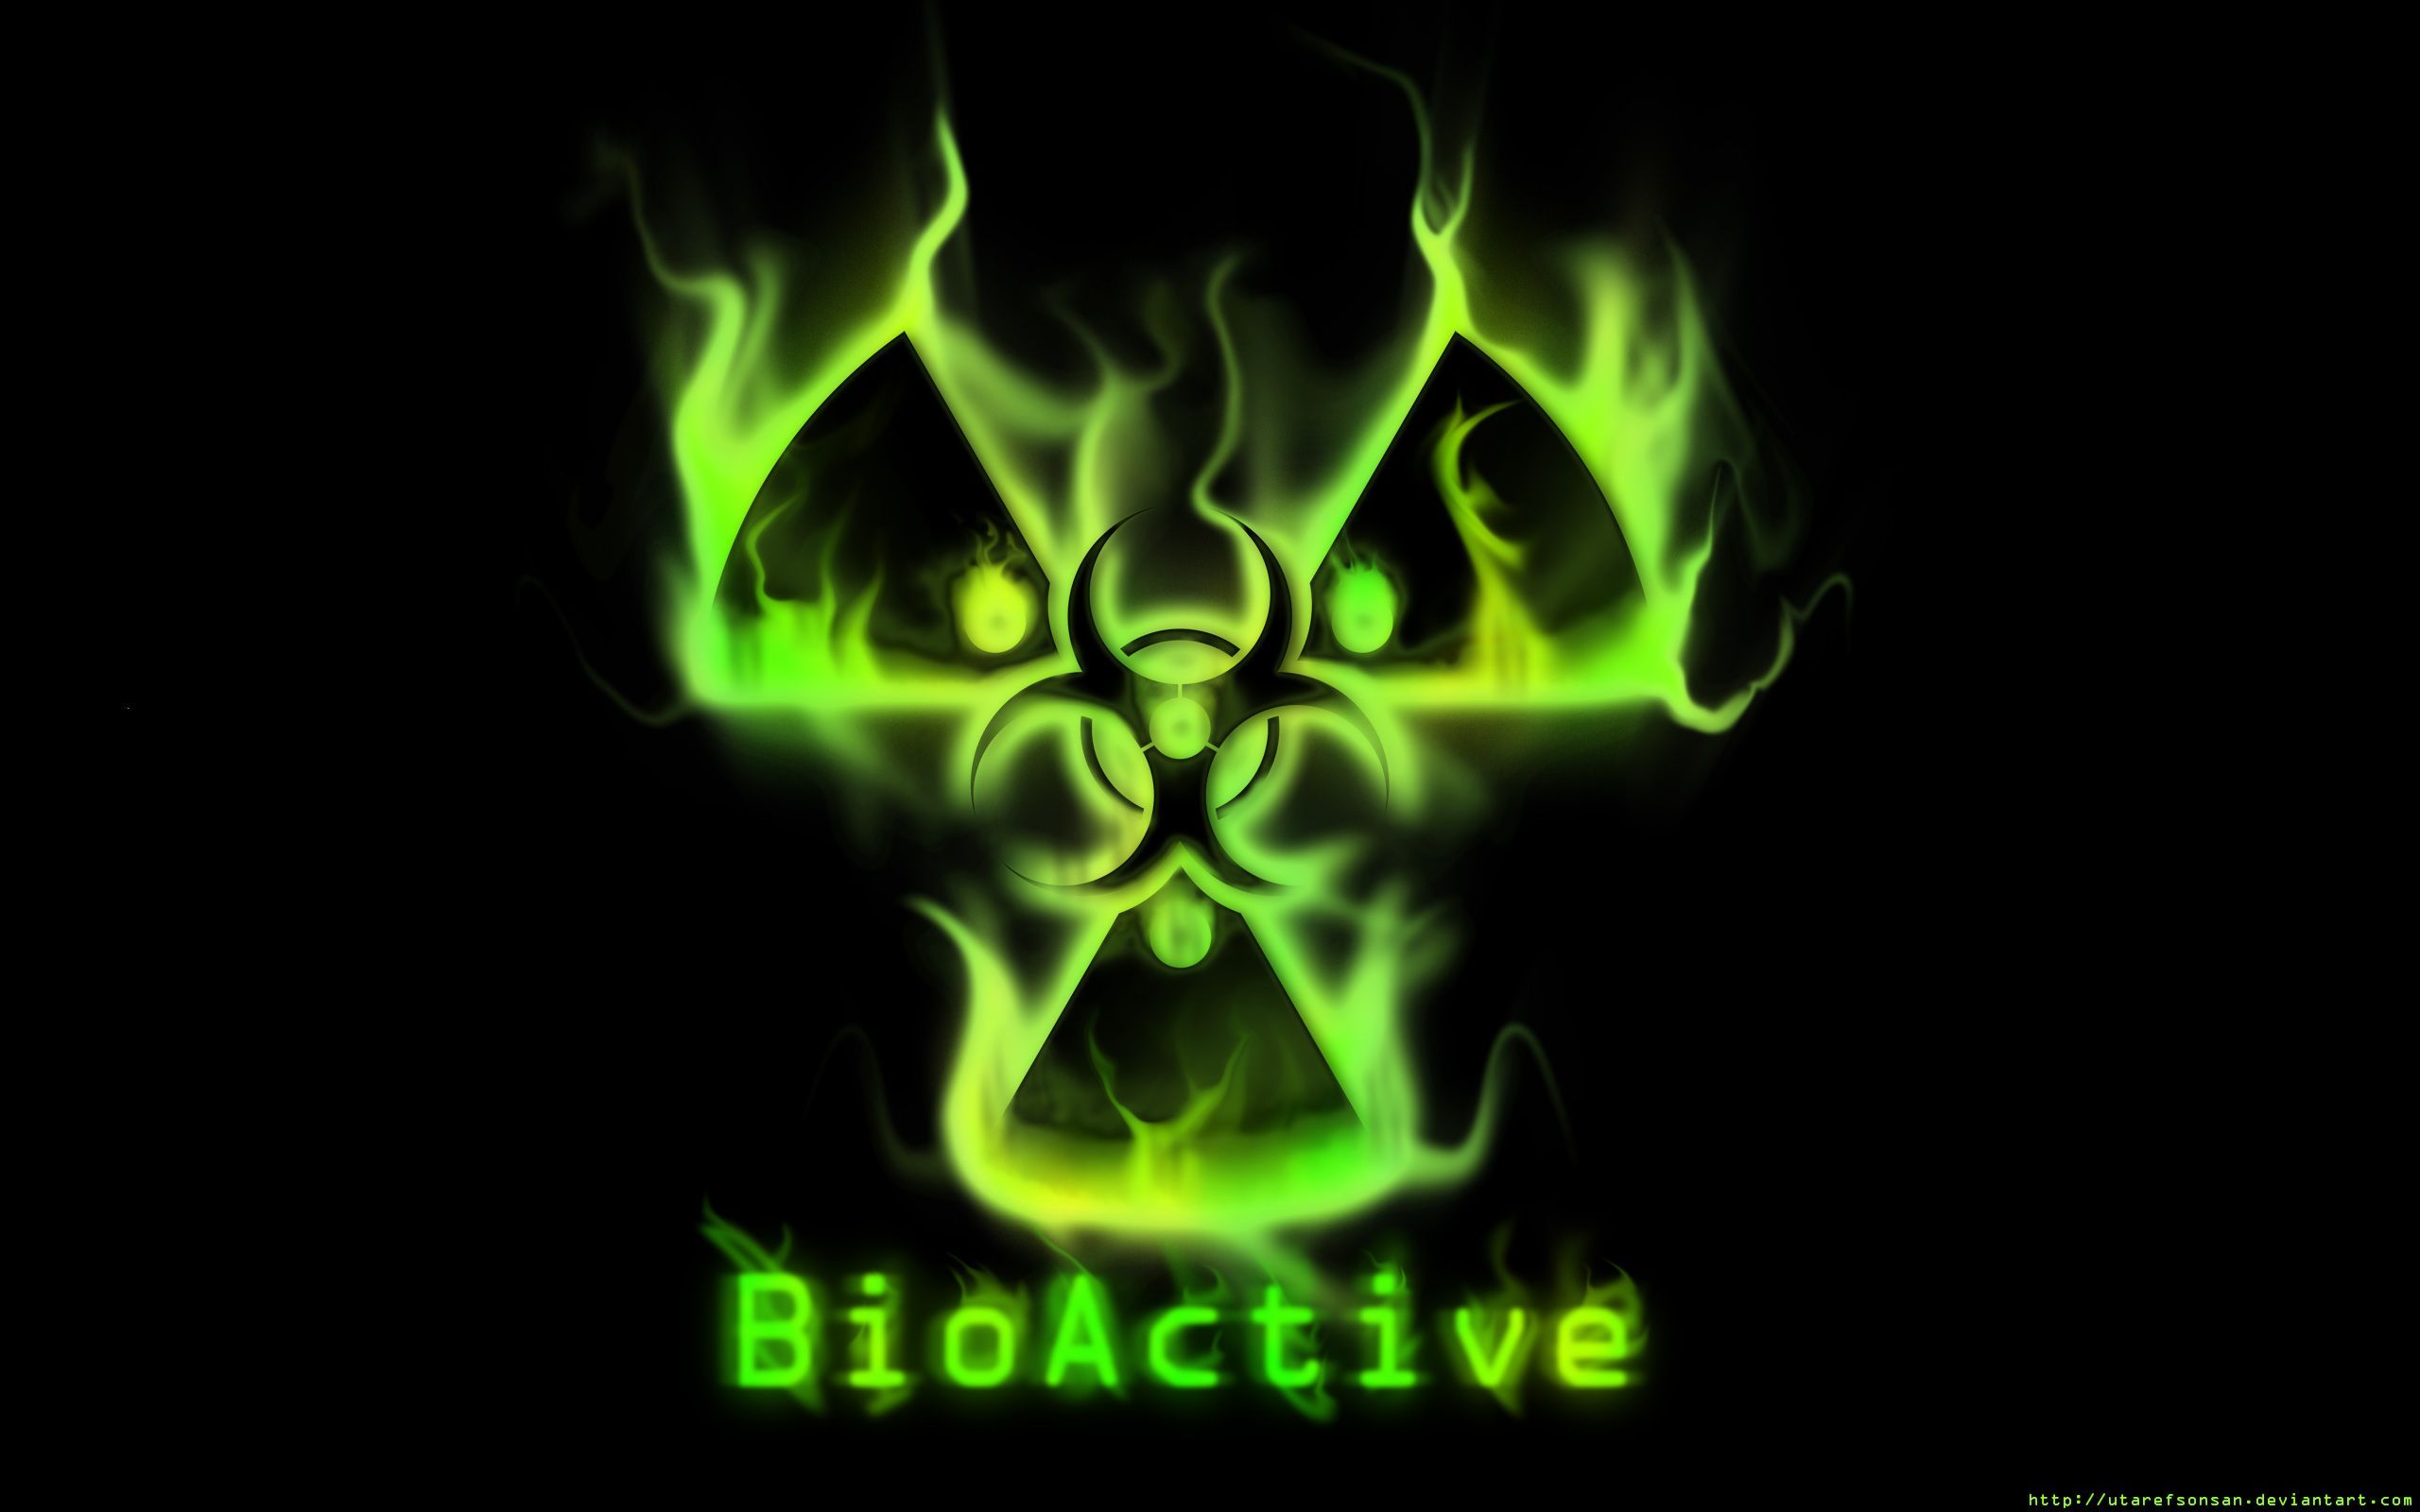 biohazard symbol wallpaper